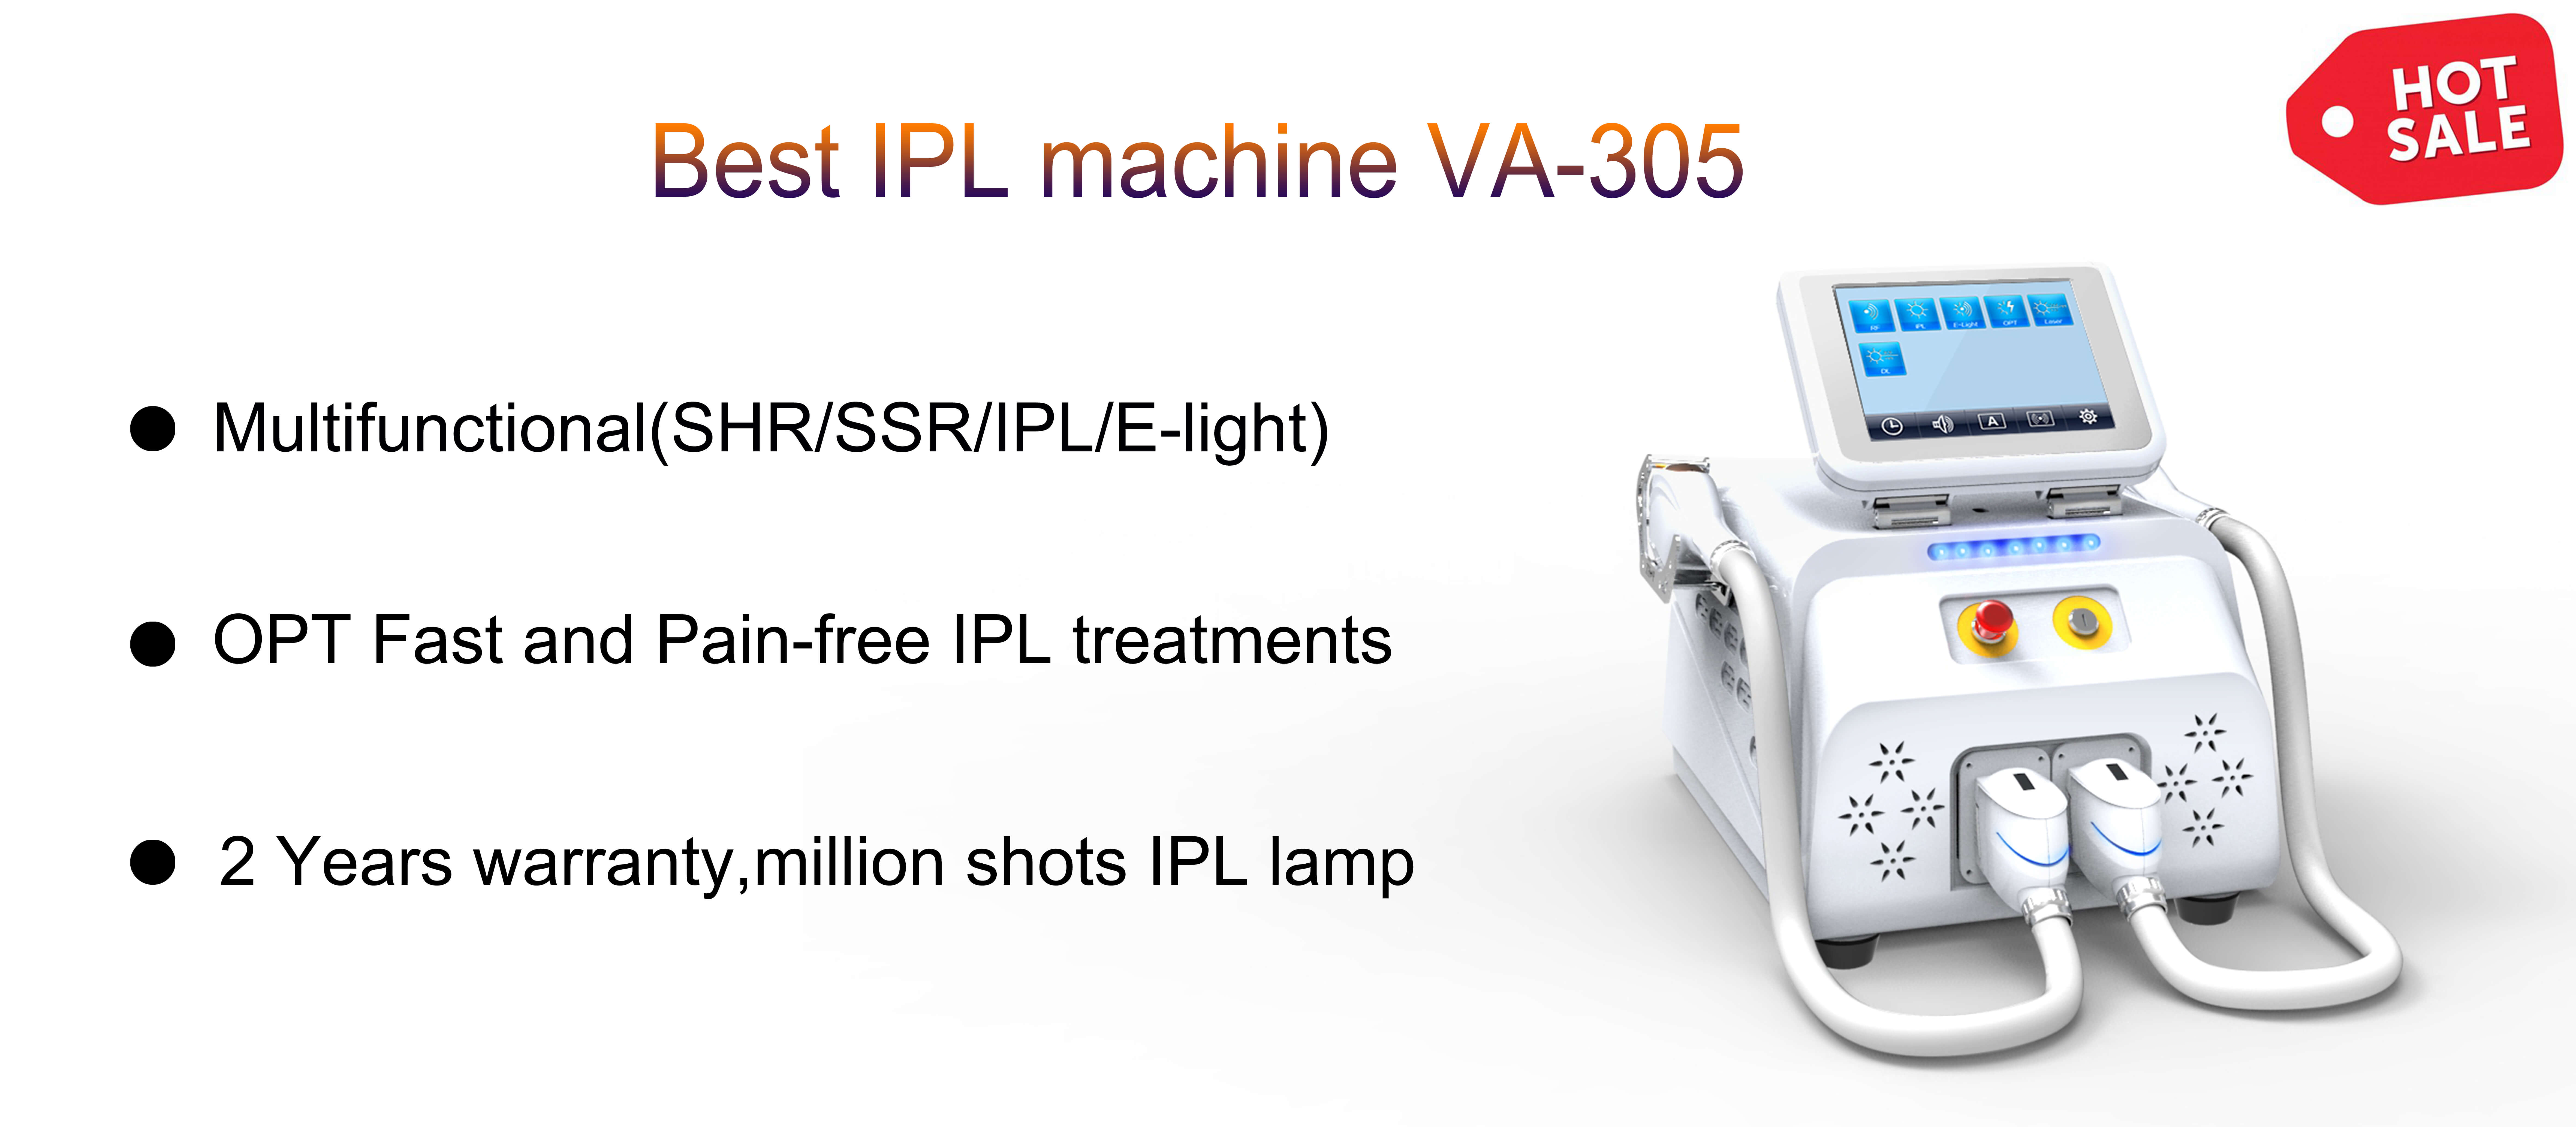 Buy IPL equipment